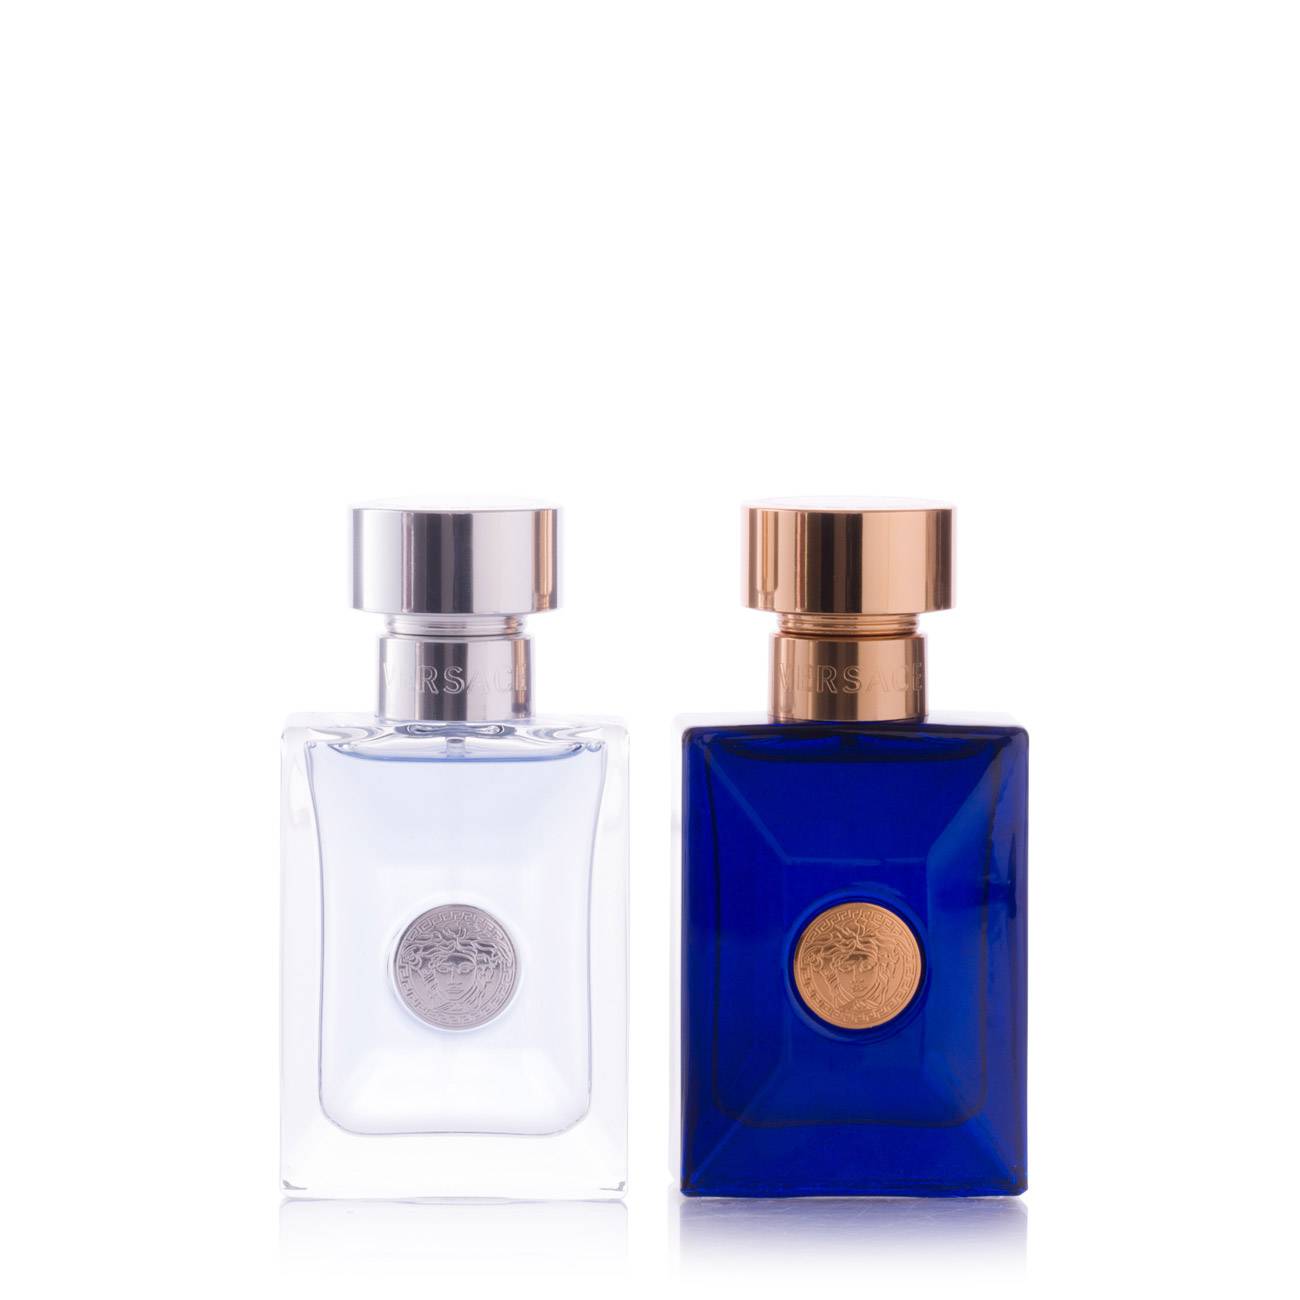 Set parfumuri Versace VERSACE & DYLAN HOMME - MIX DUO 60ml cu comanda online